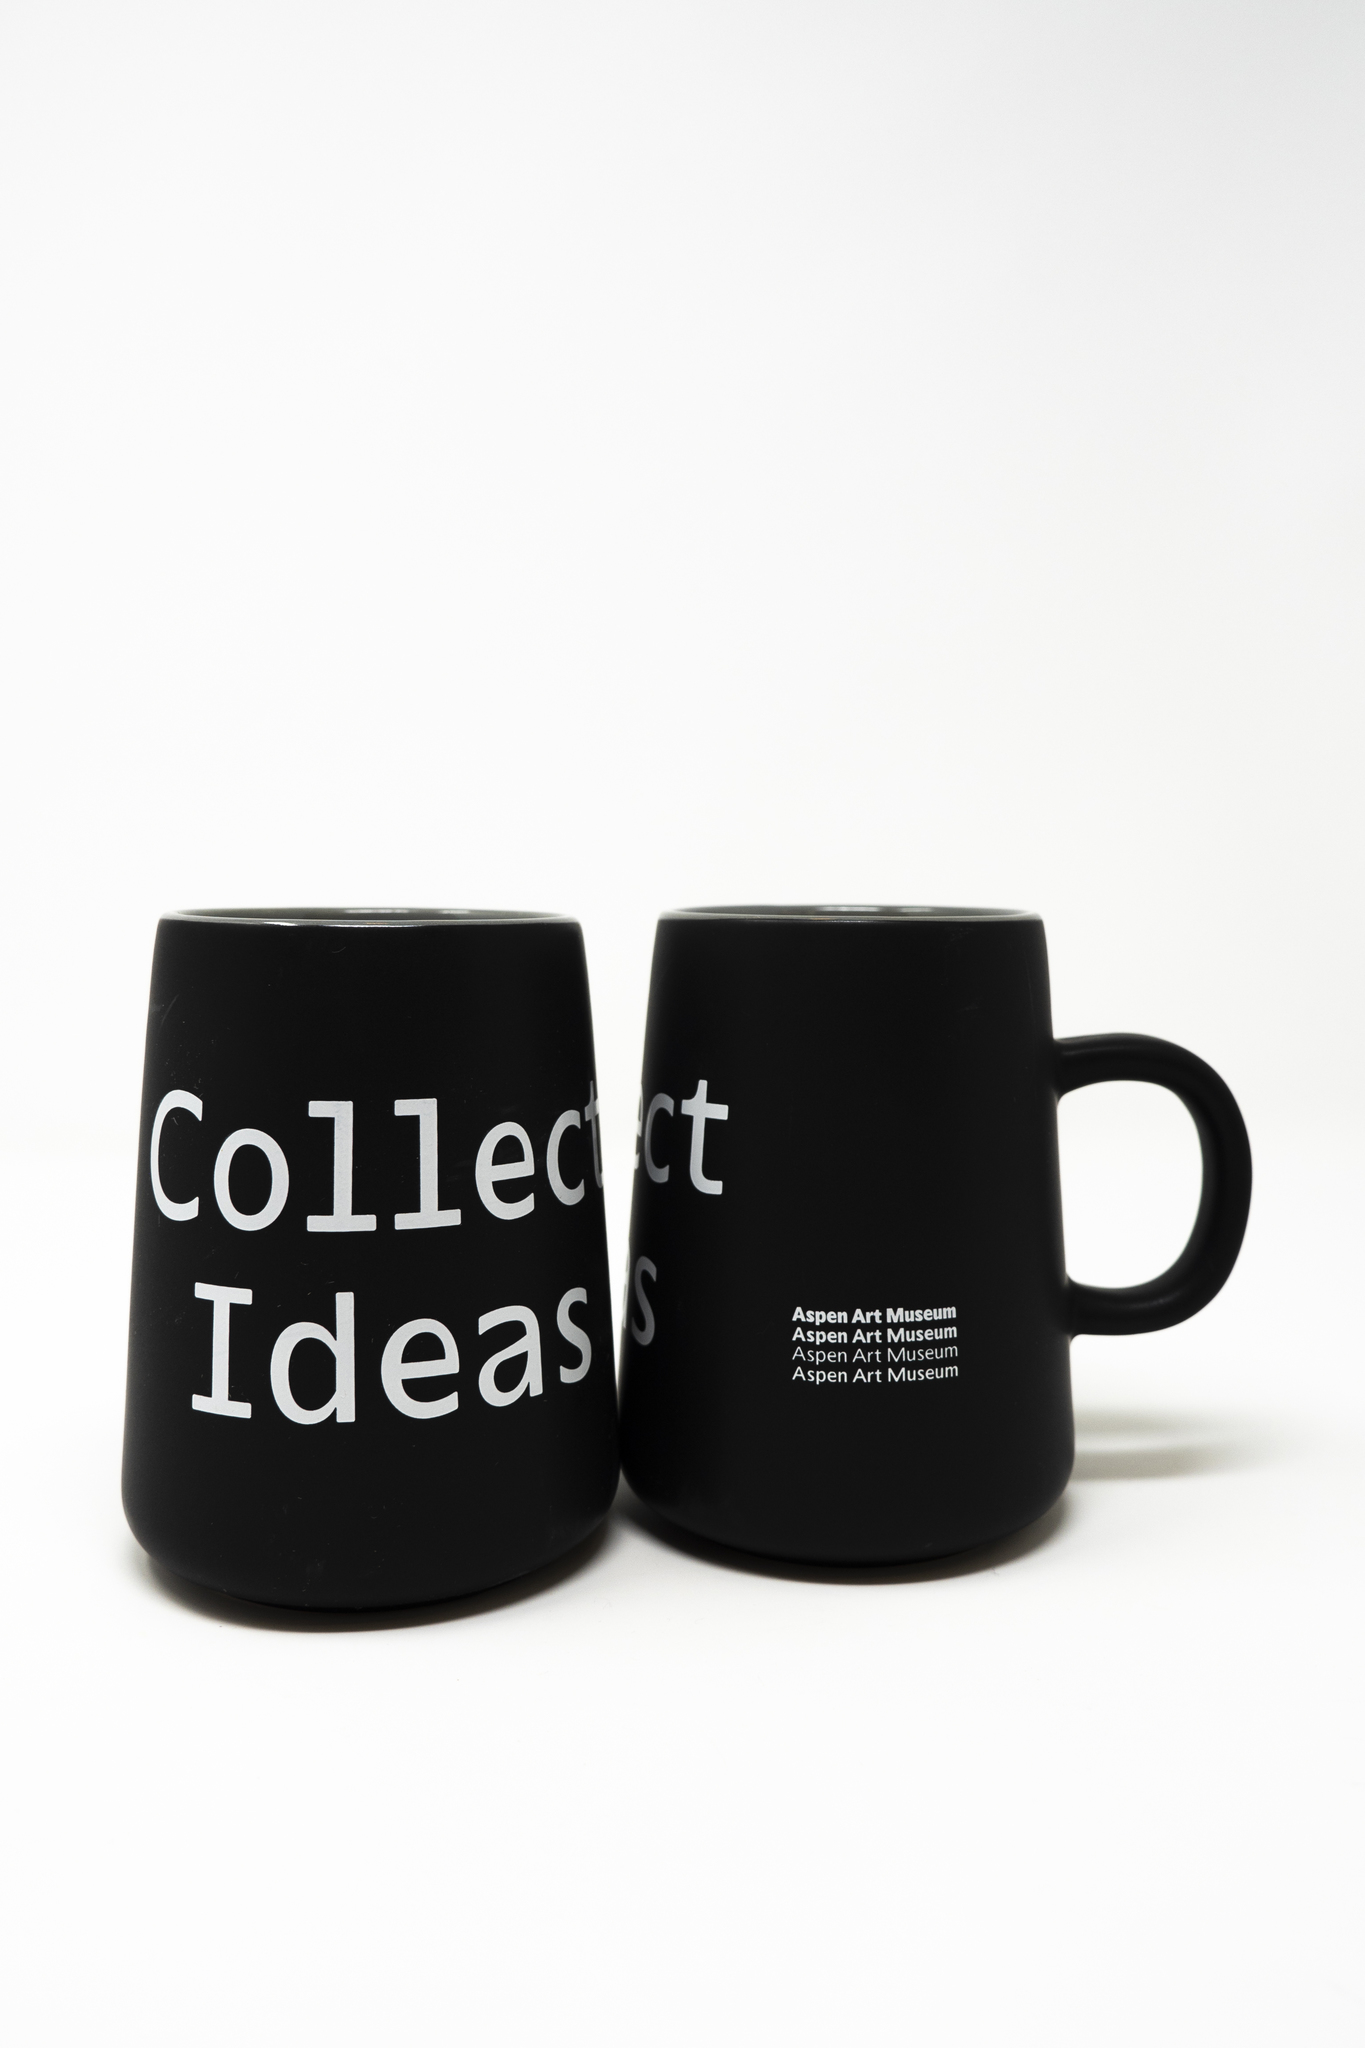 Aam collect ideas mug